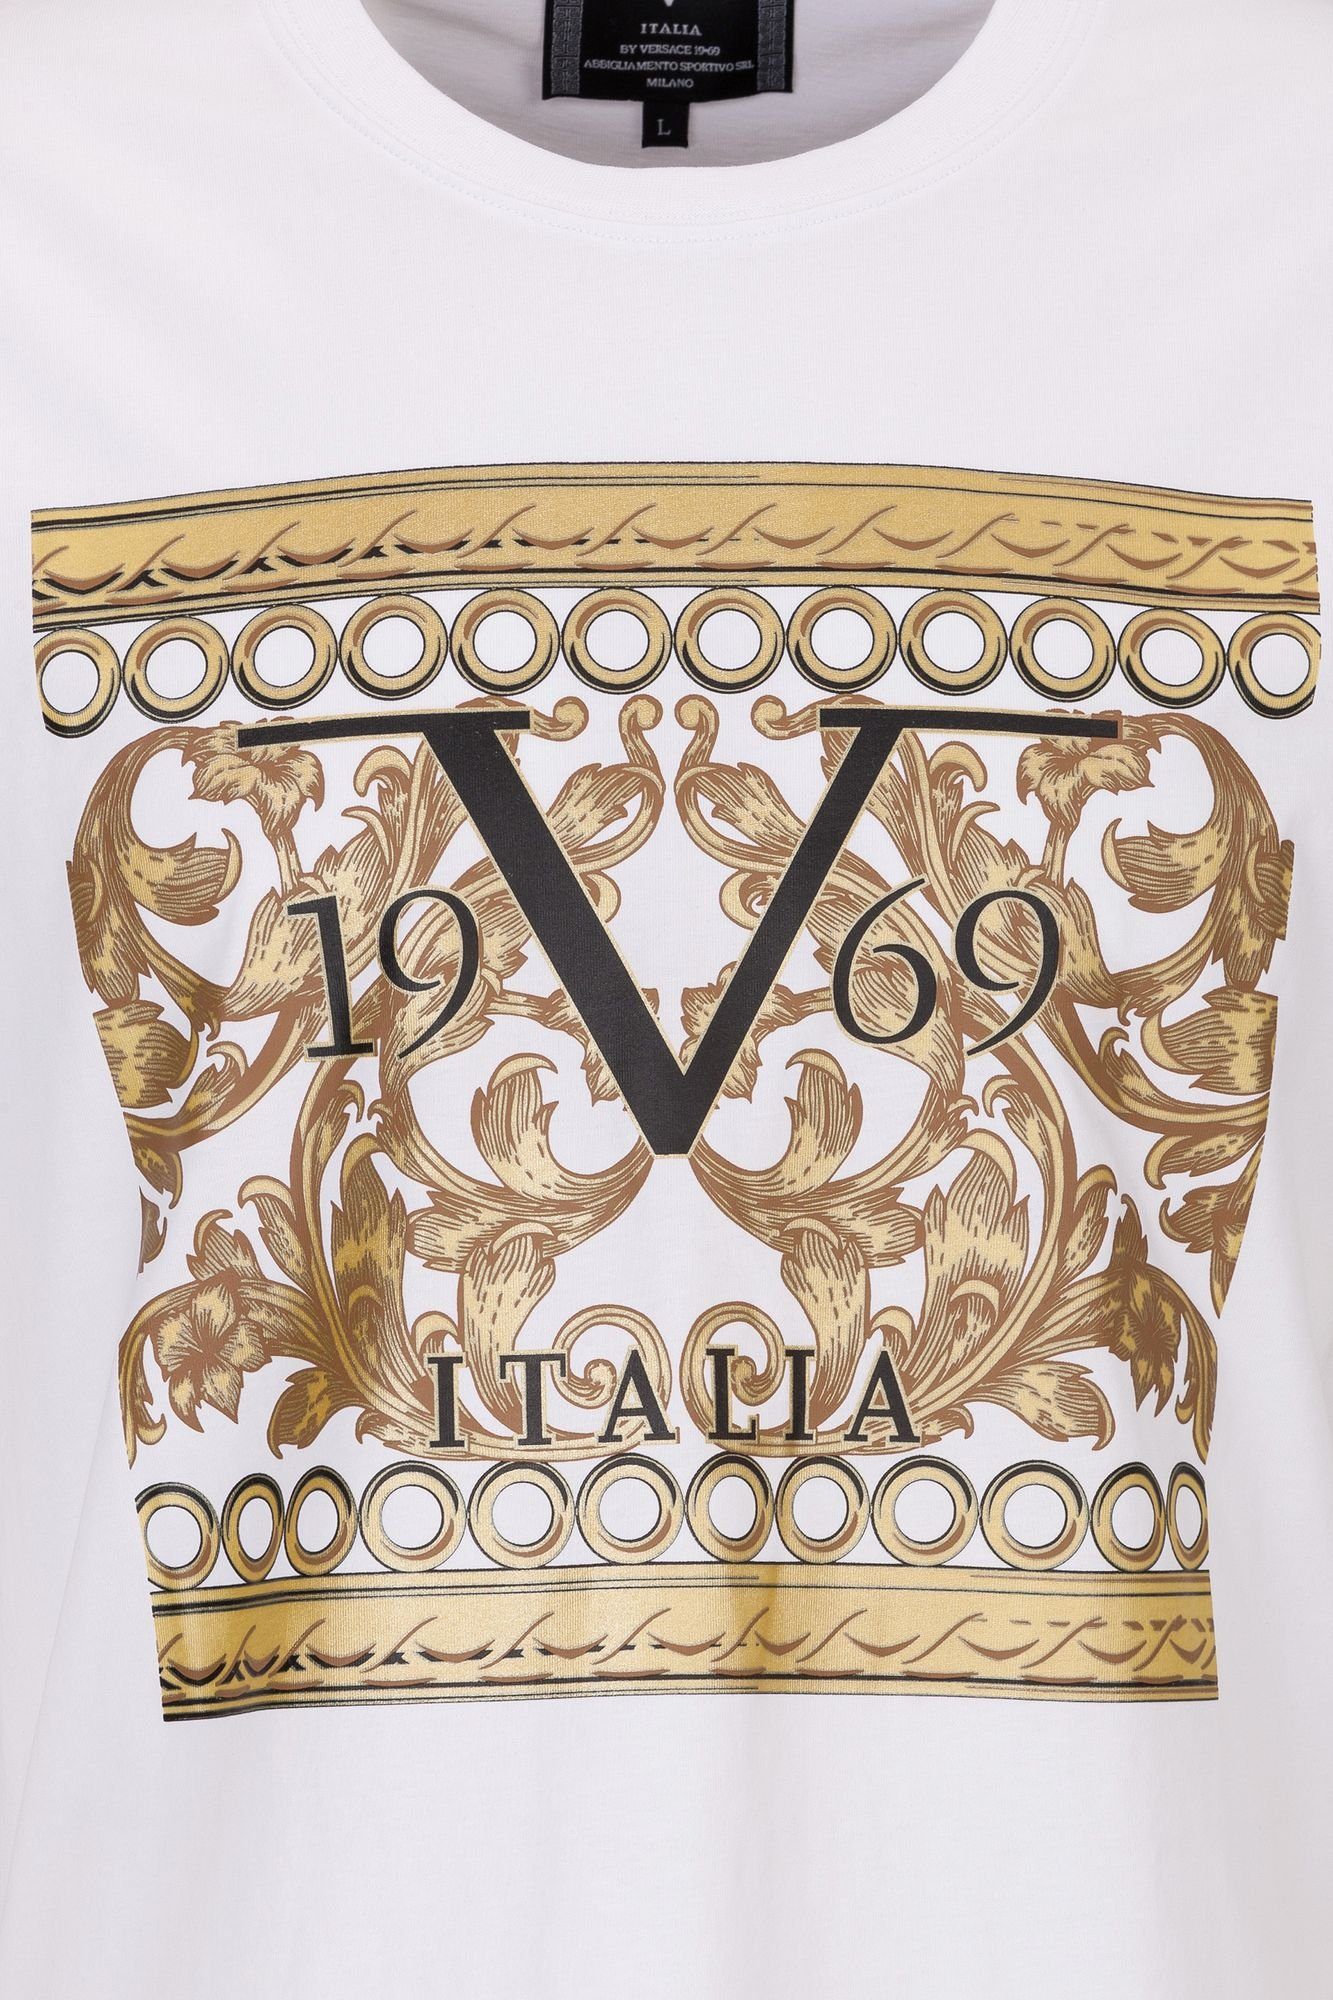 19V69 Italia by Versace T-Shirt Barocc